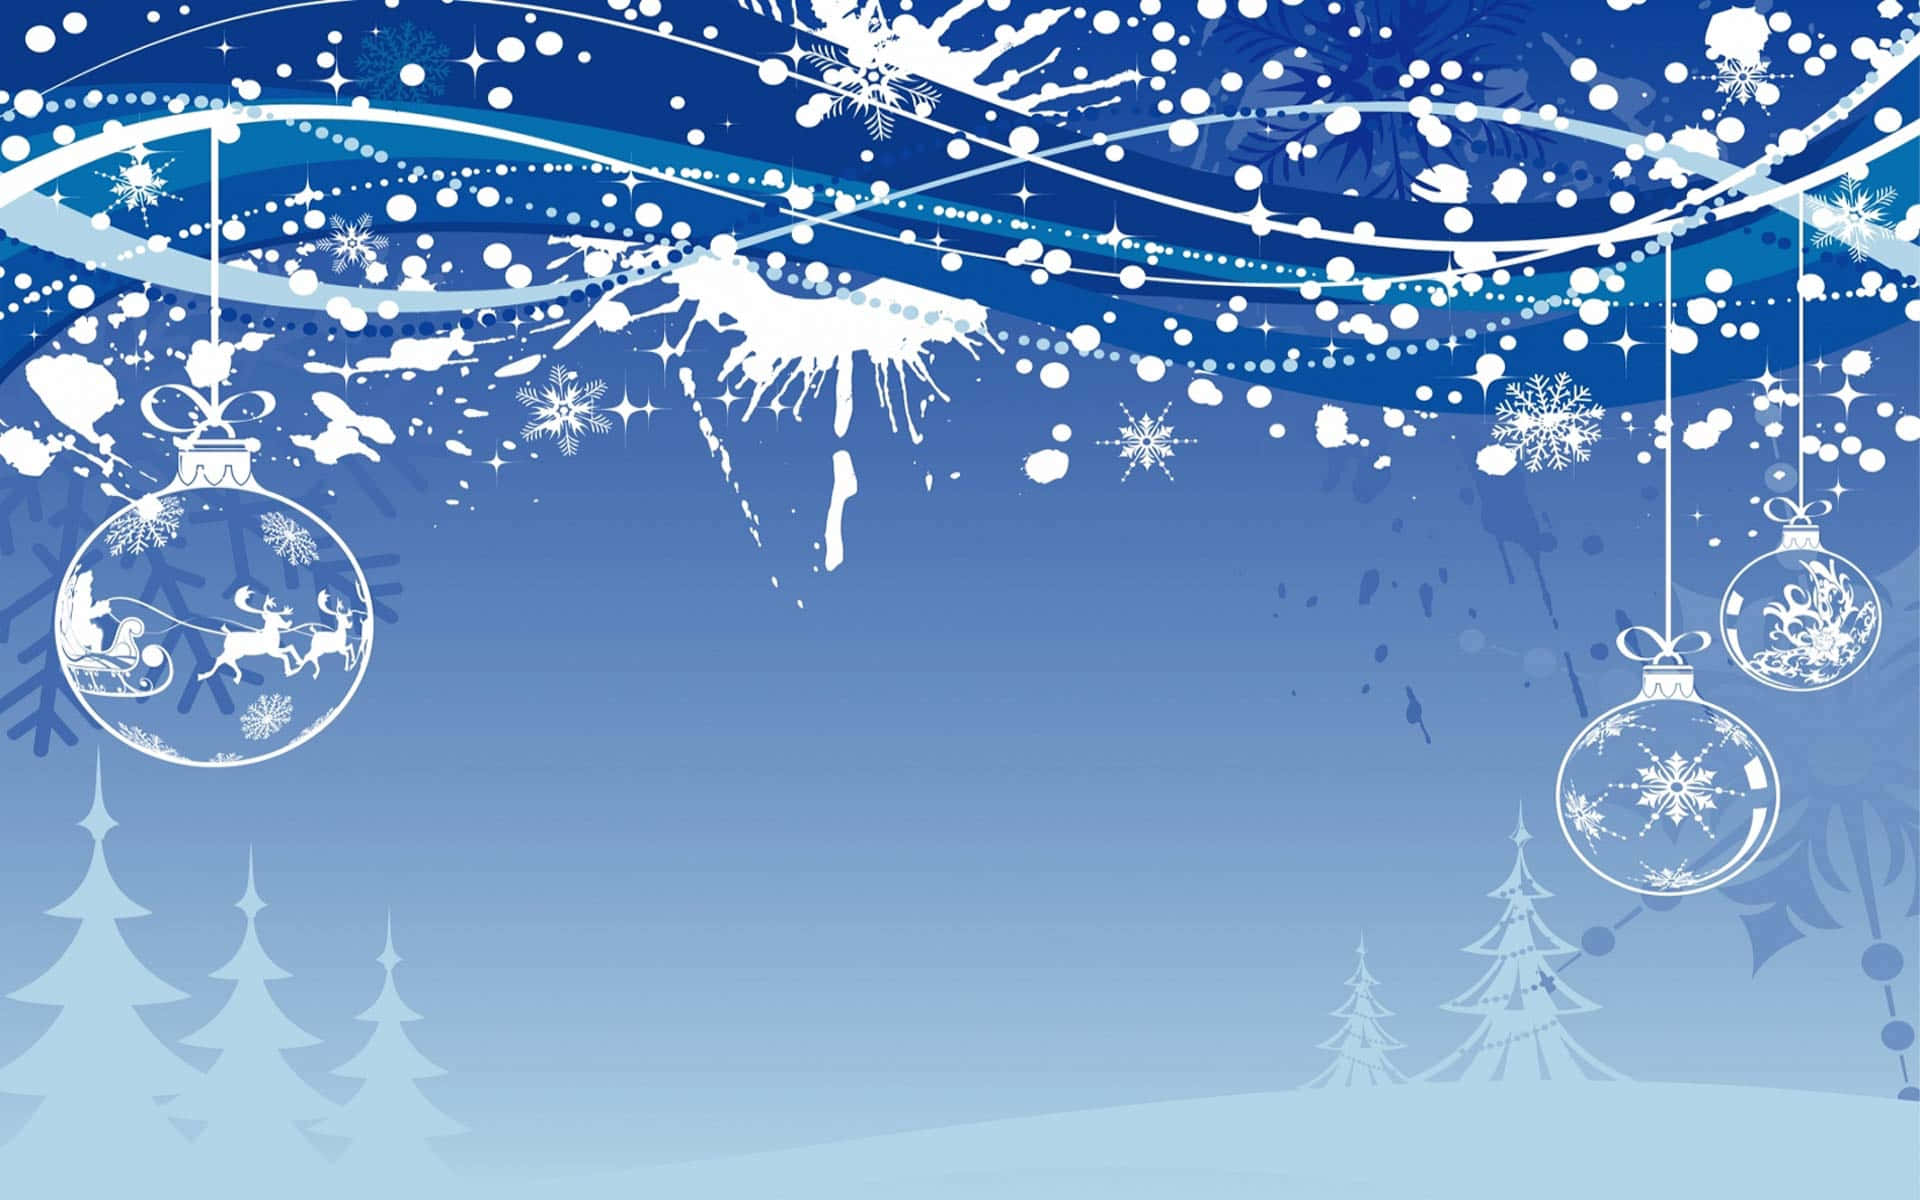 Winter Wonderland during the Holidays Wallpaper